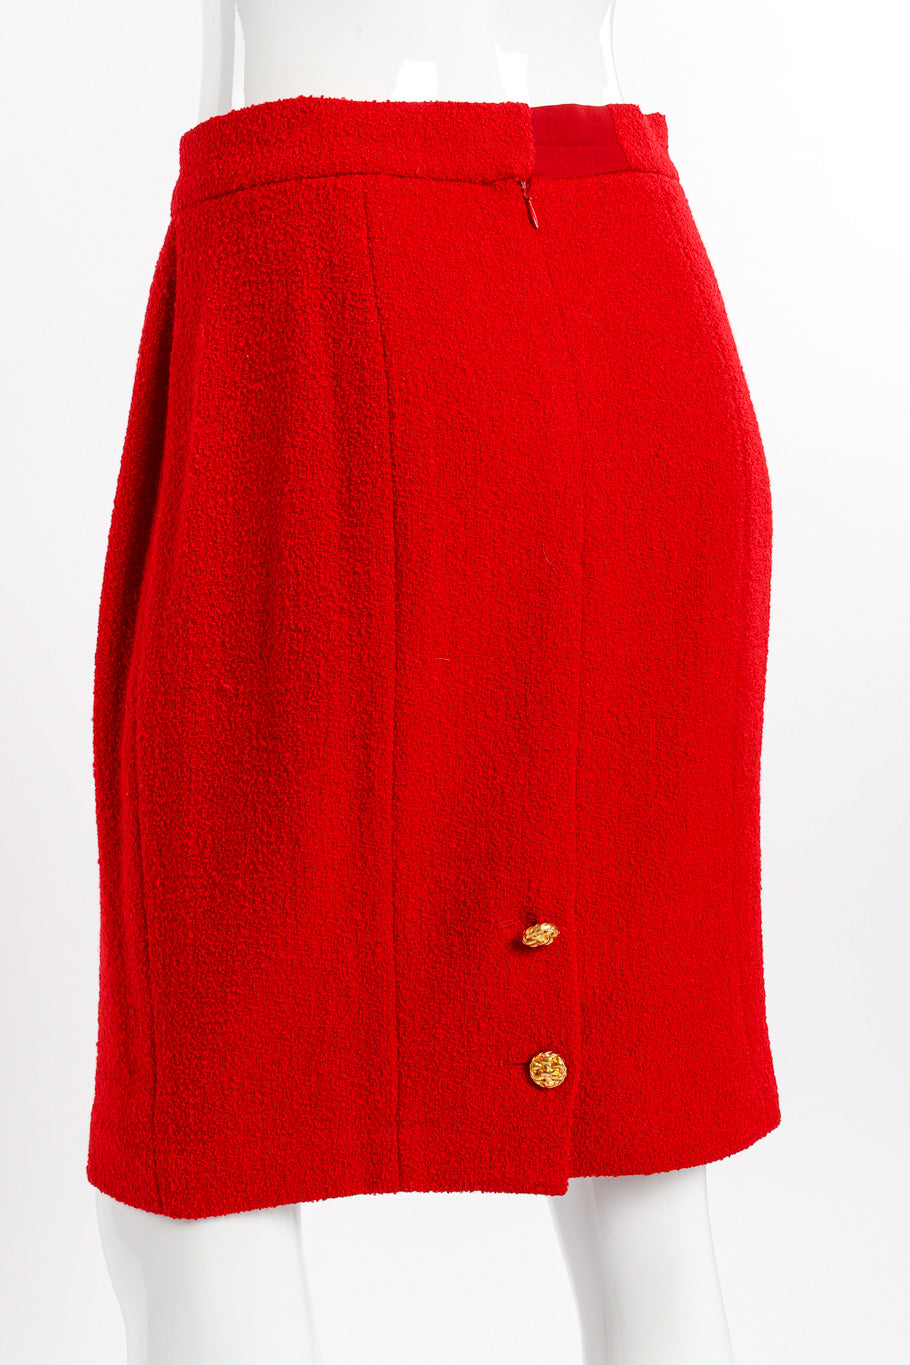 Vintage Chanel 1992 F/W Bouclé Long Jacket And Skirt Set skirt back view on mannequin closeup @recessla